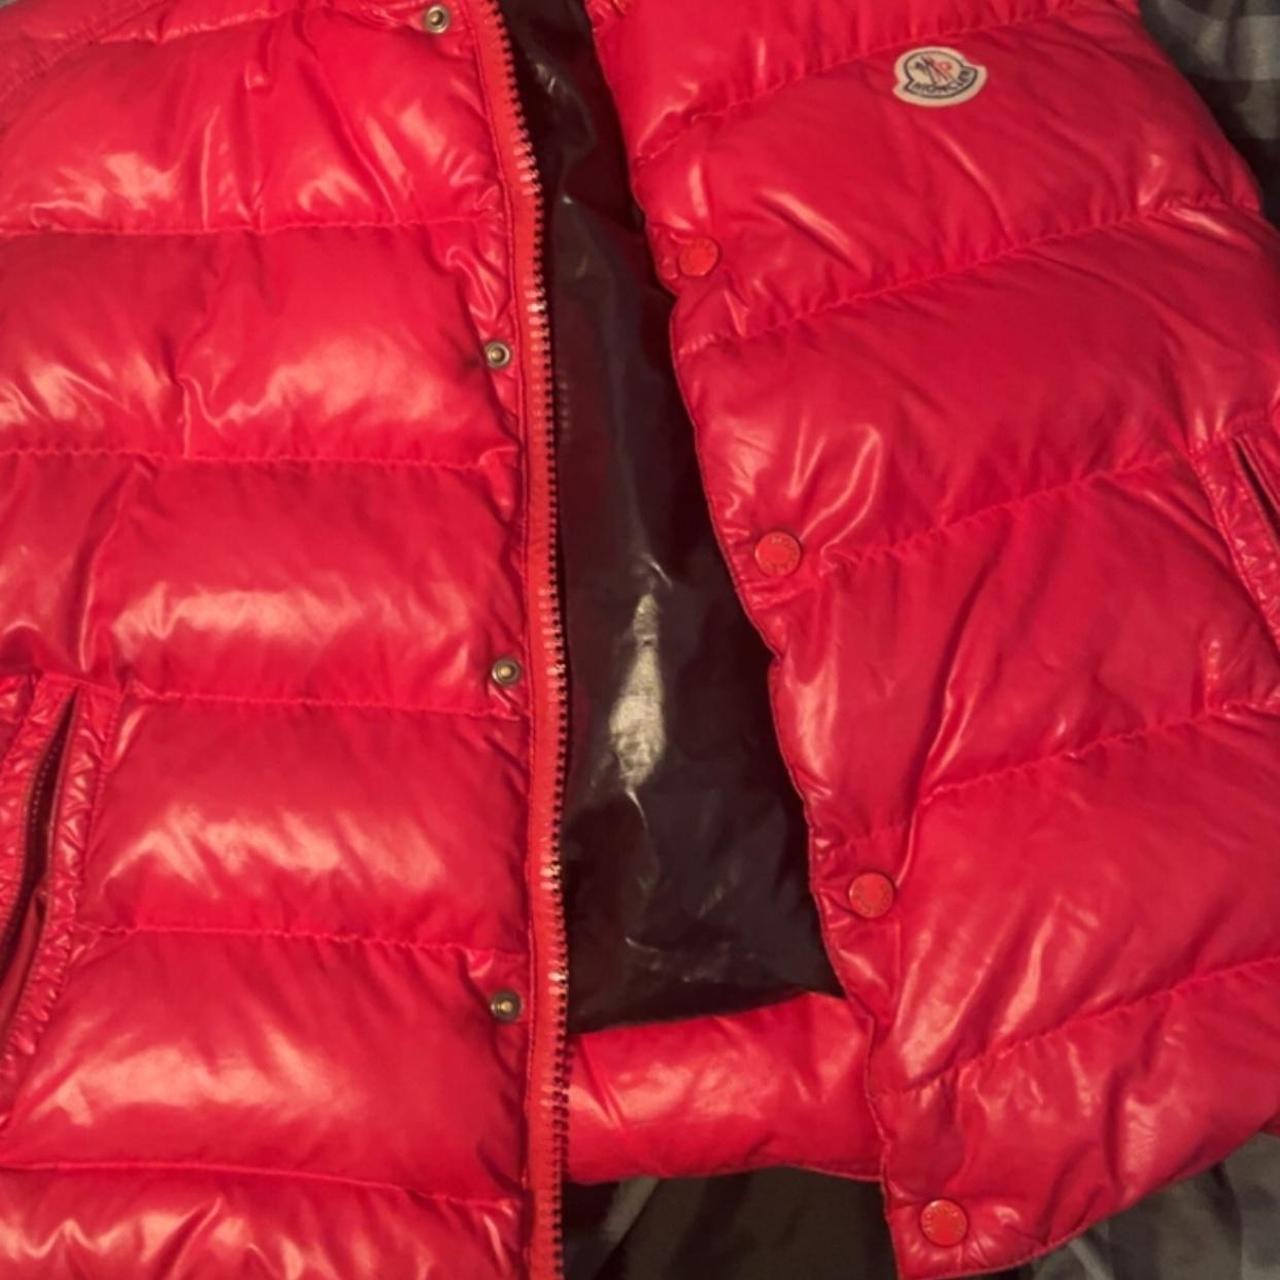 Red Tibb Tibb Moncler Vest Flaws Shown in pics ; ... - Depop